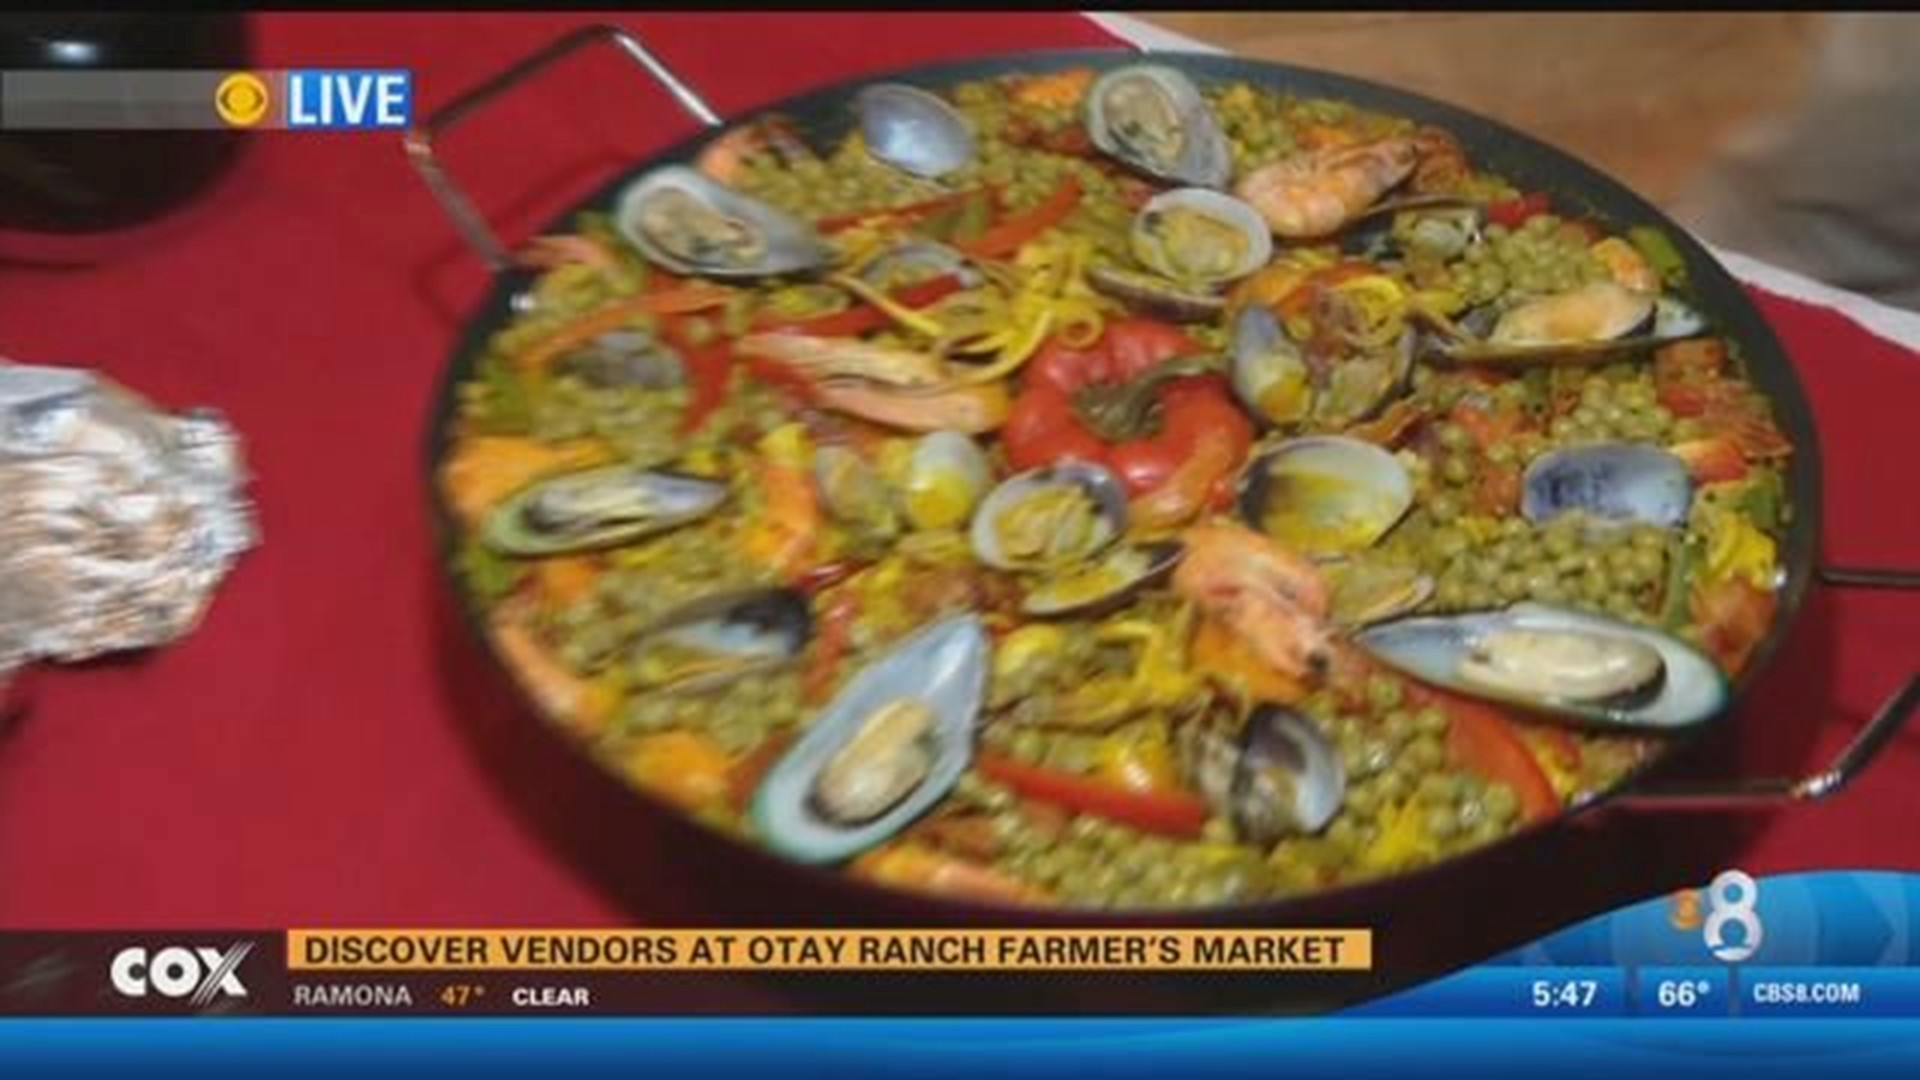 Discover vendors at Otay Ranch Farmer's Market